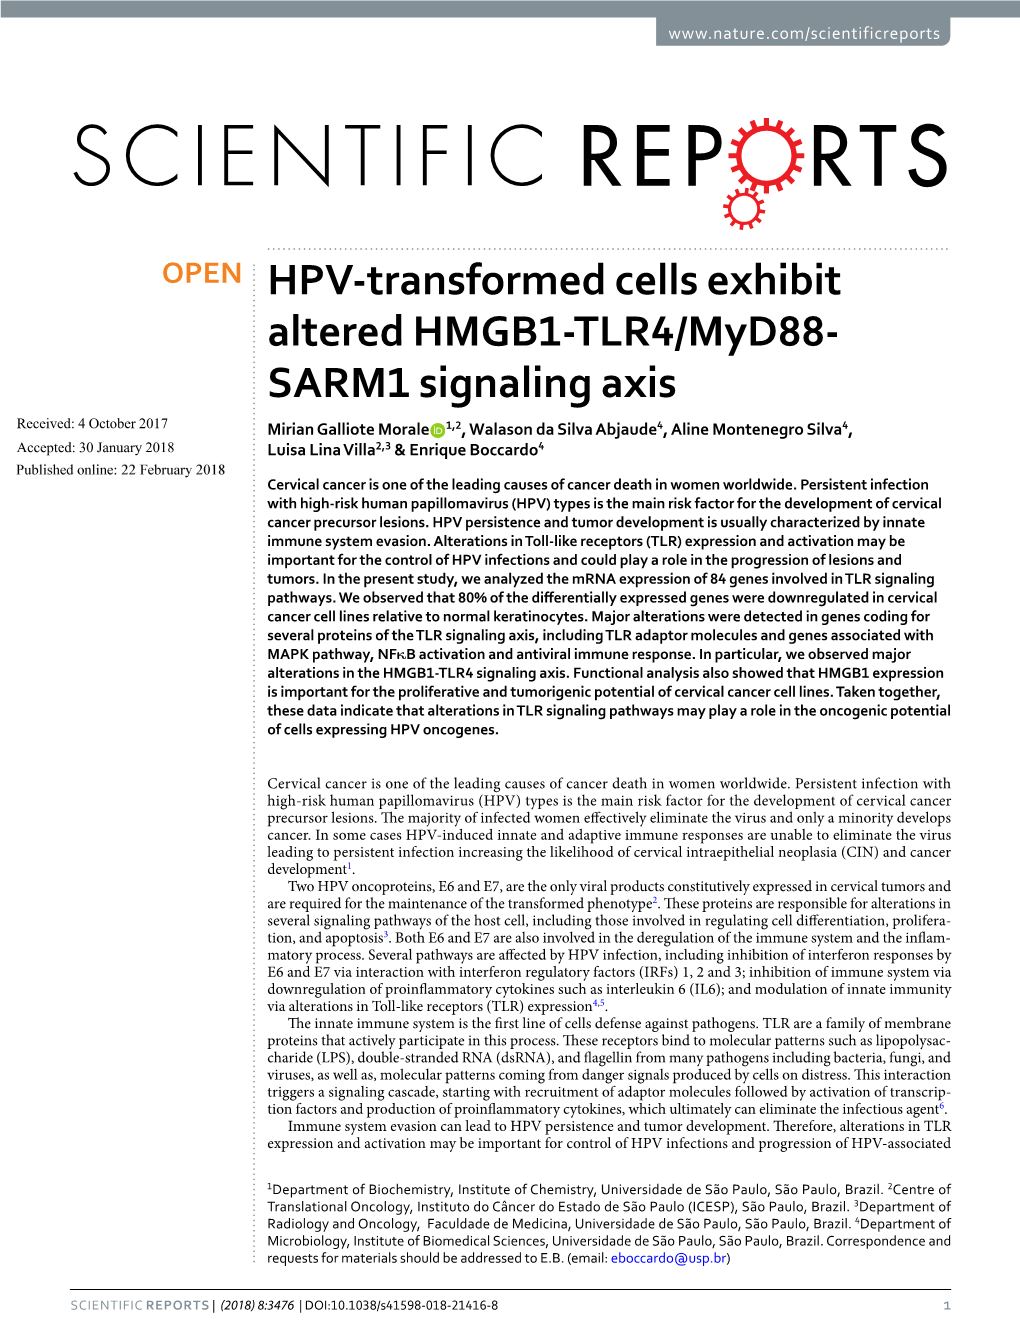 HPV-Transformed Cells Exhibit Altered HMGB1-TLR4/Myd88-SARM1